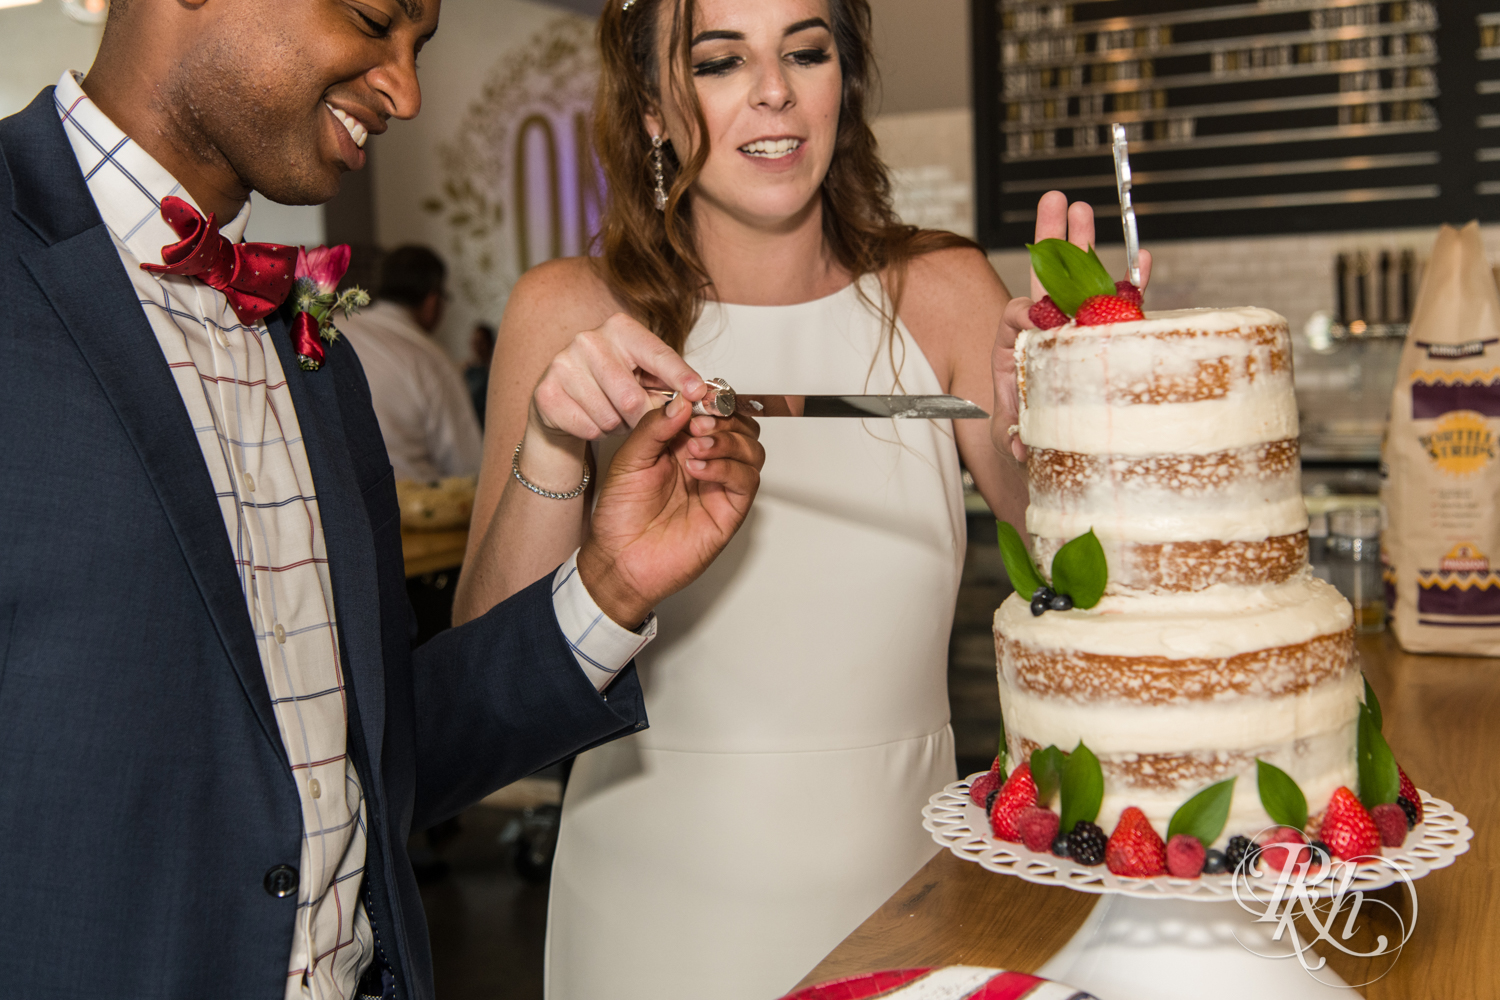 Black man and woman biracial couple cut cake at wedding reception in Minneapolis, Minnesota.